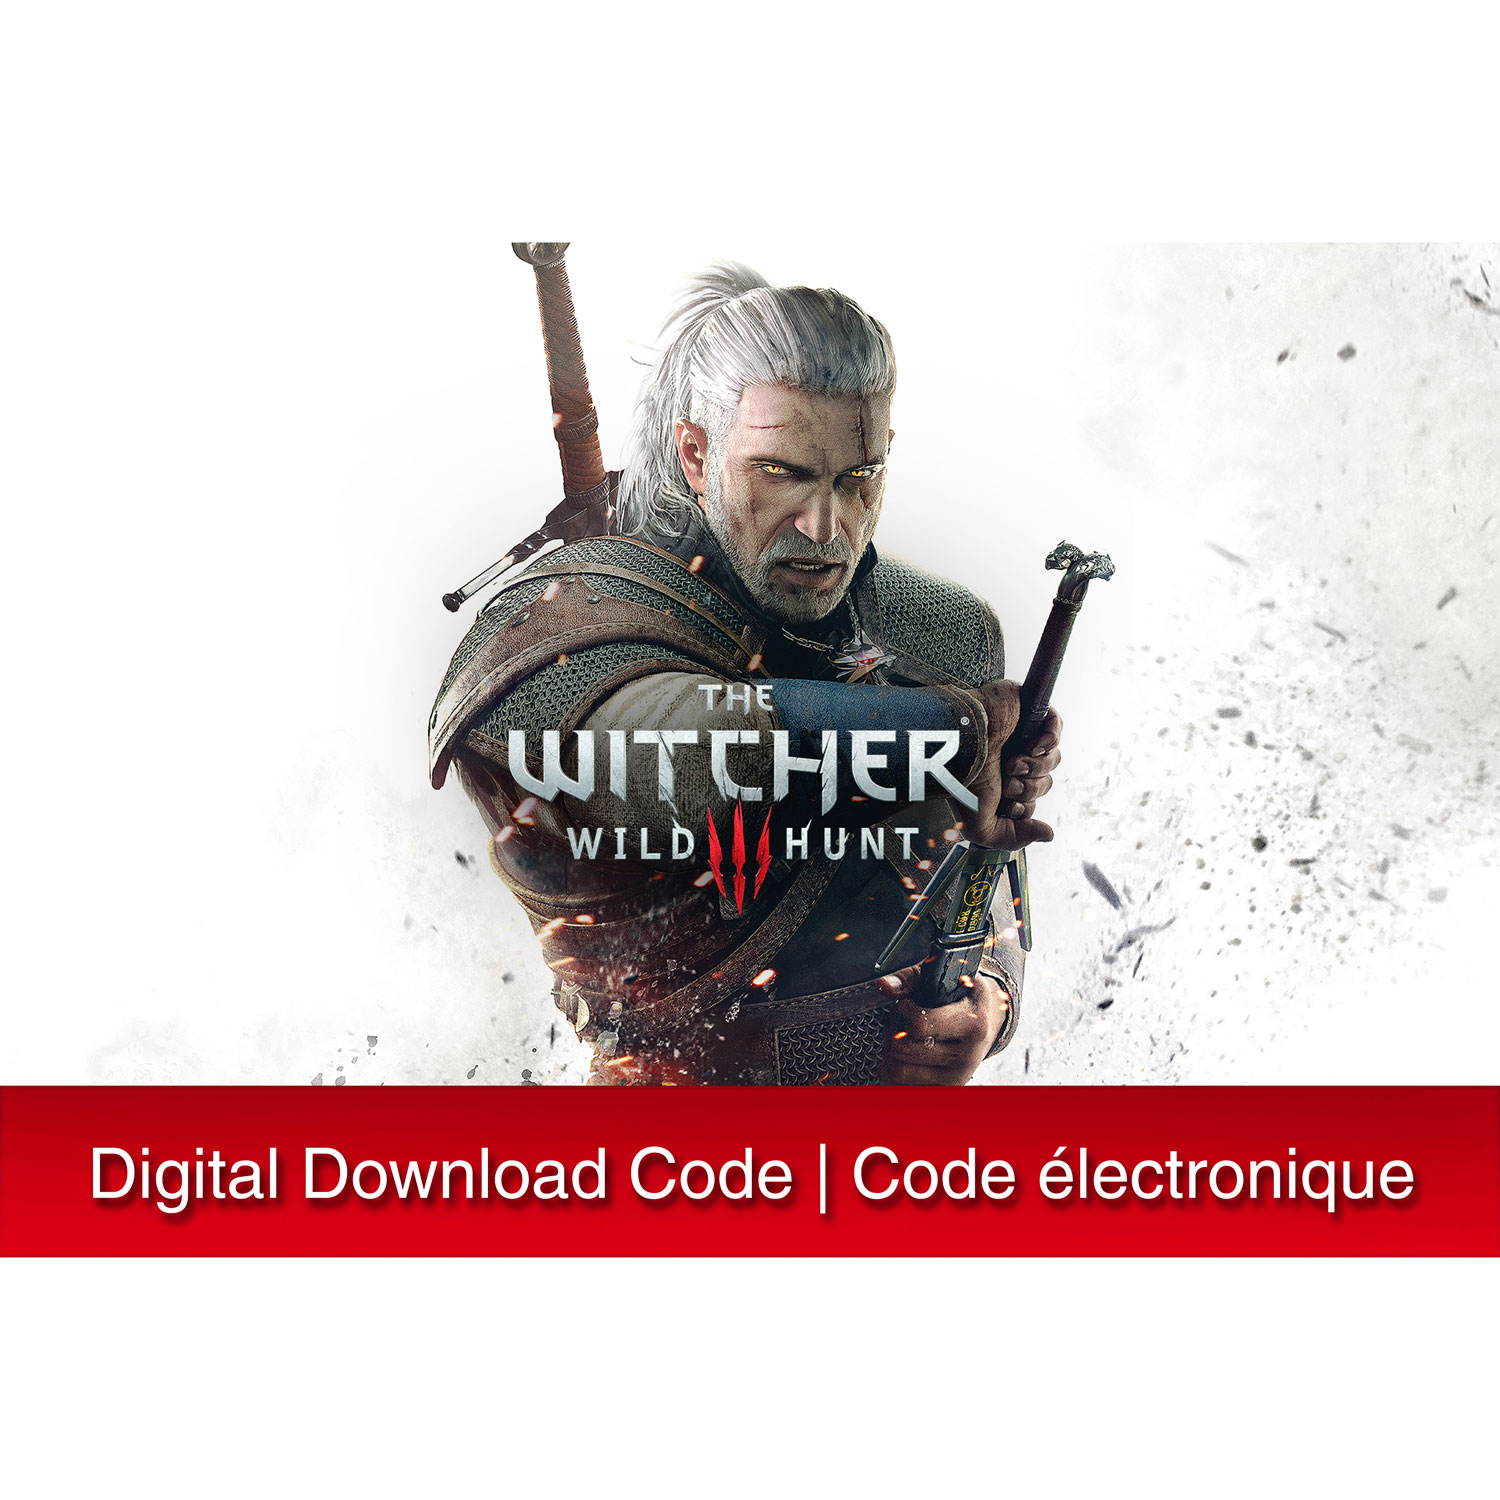 The Witcher 3: Wild Hunt (Switch) - Digital Download